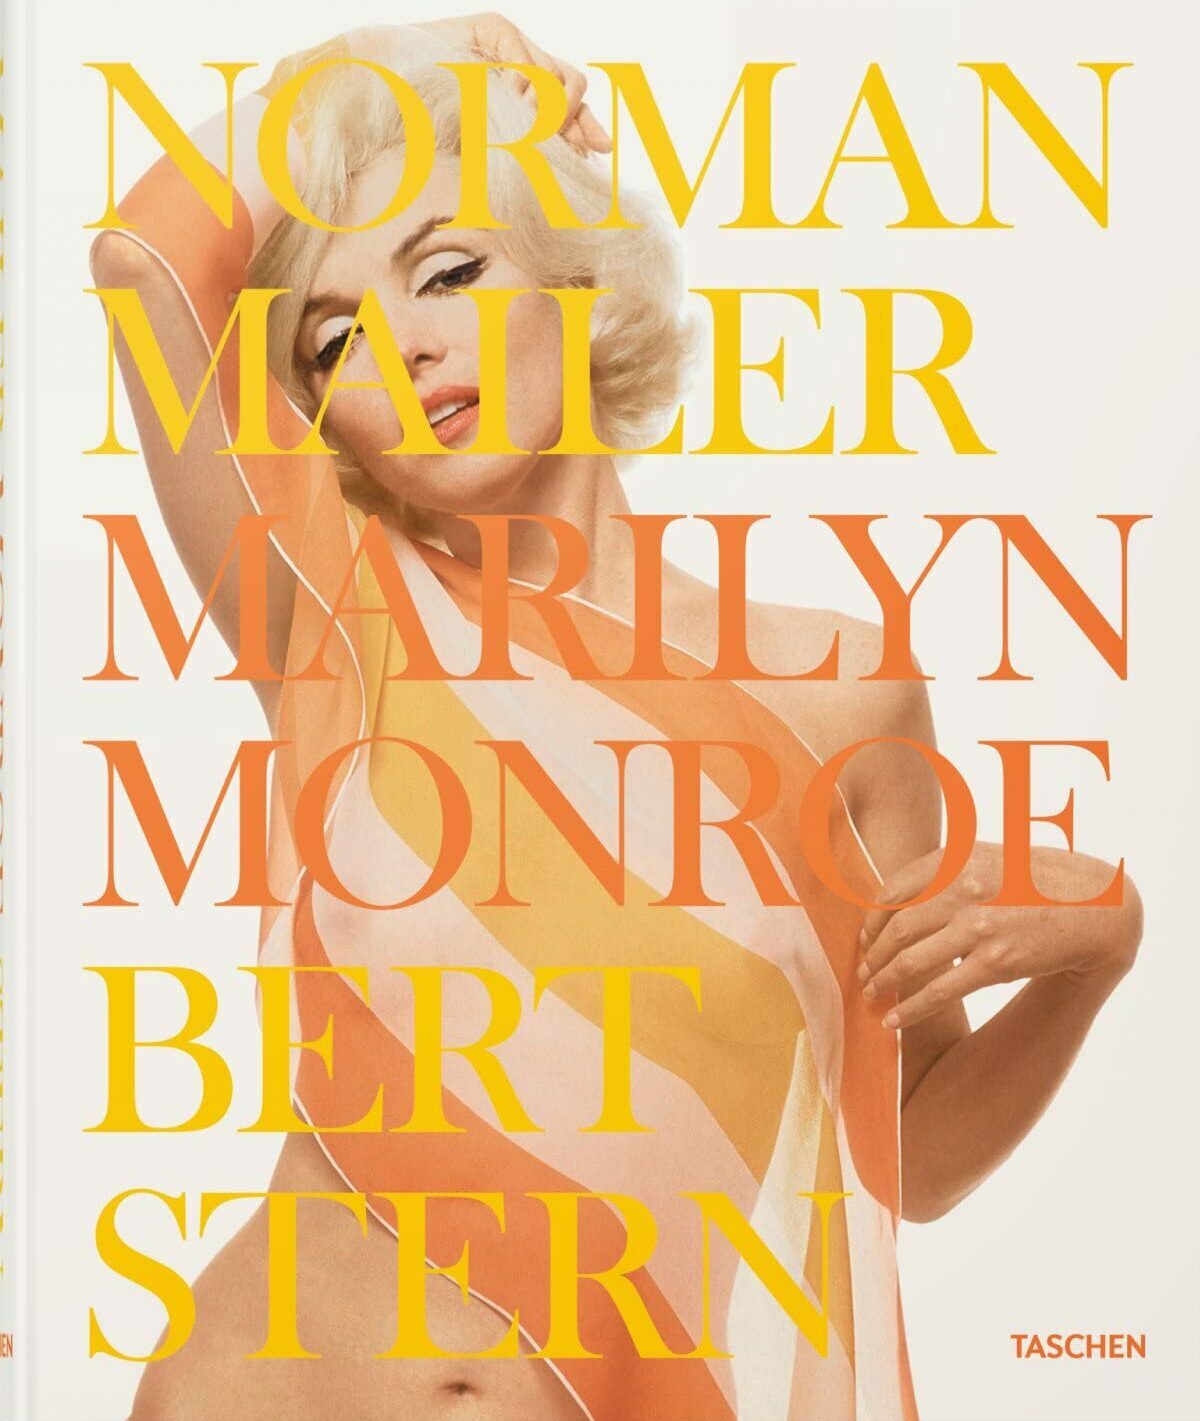 Marilyn Monroe. Norman Mailer. Bert Stern.